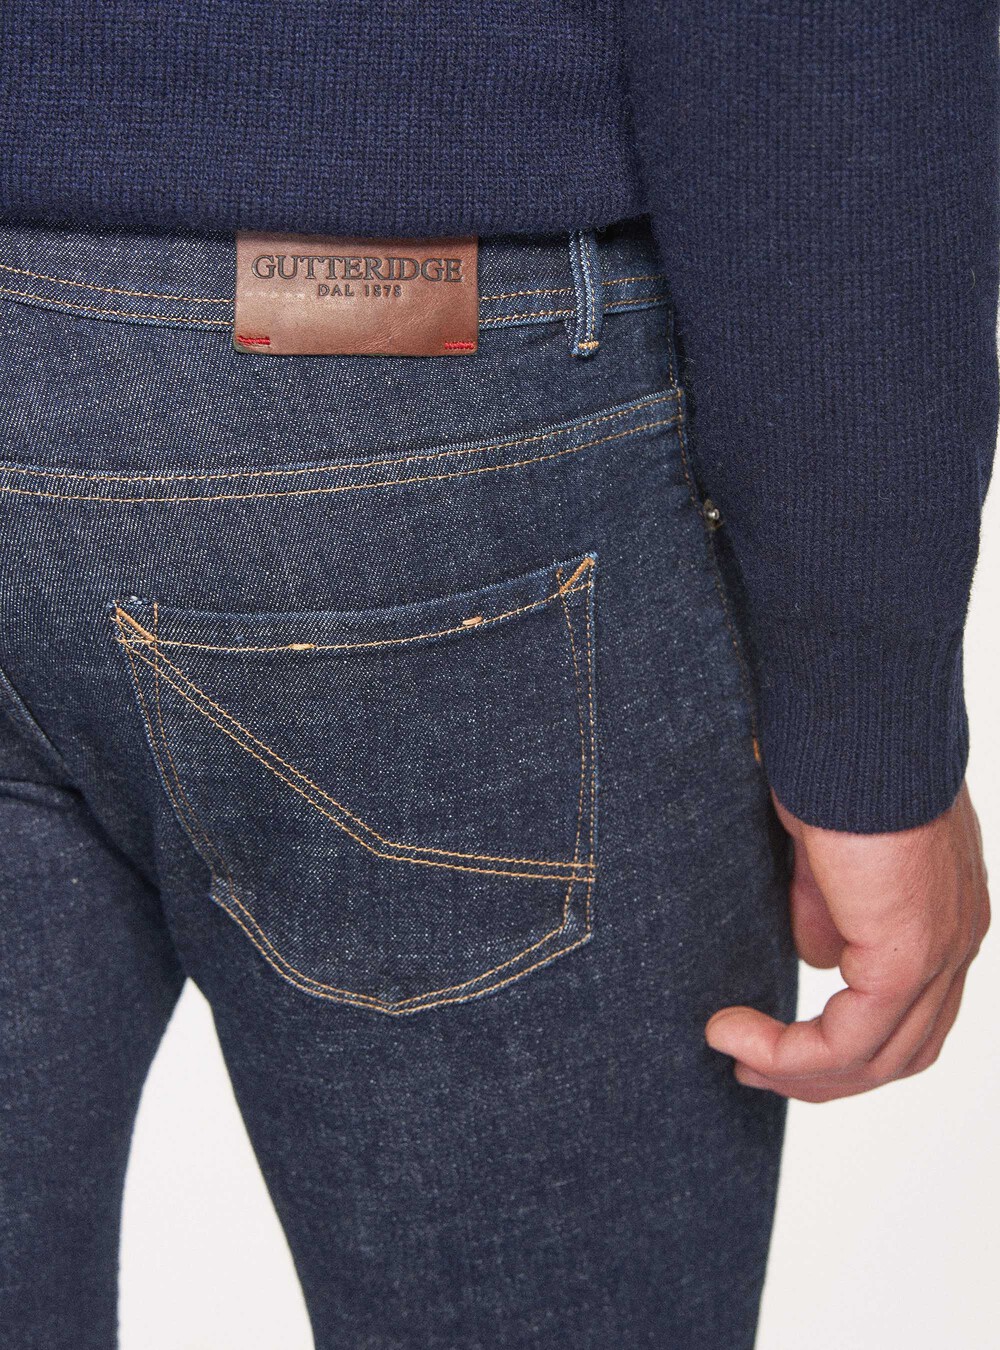 Jeans regular fit in blu navy | Gutteridge | catalog-gutteridge-storefront  Uomo